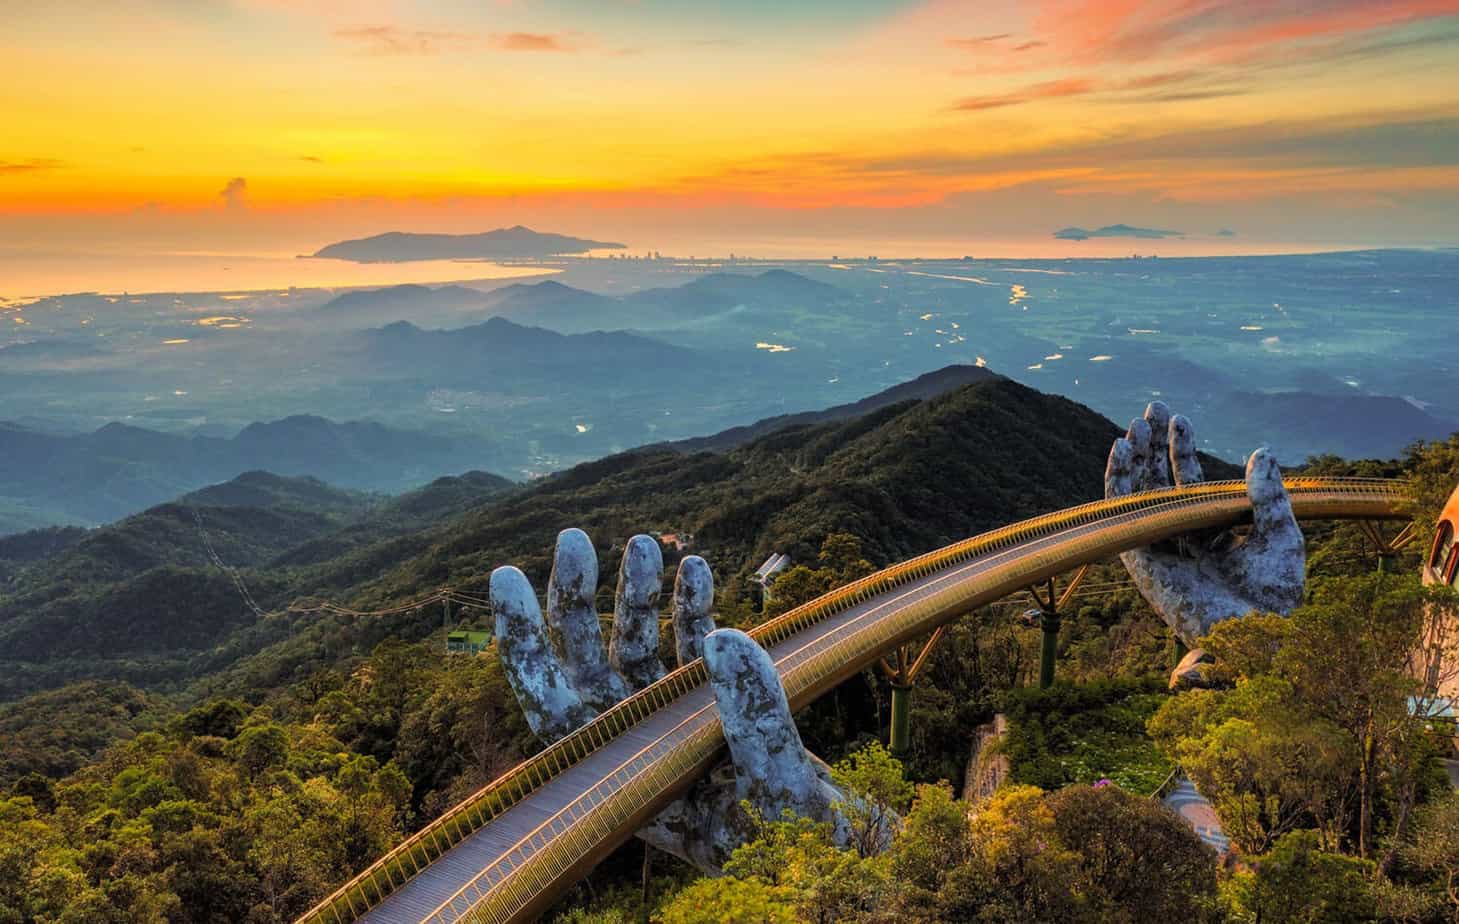 Top 12 best things to do in Da Nang - Visit Golden Bridge on Ba Na Hills